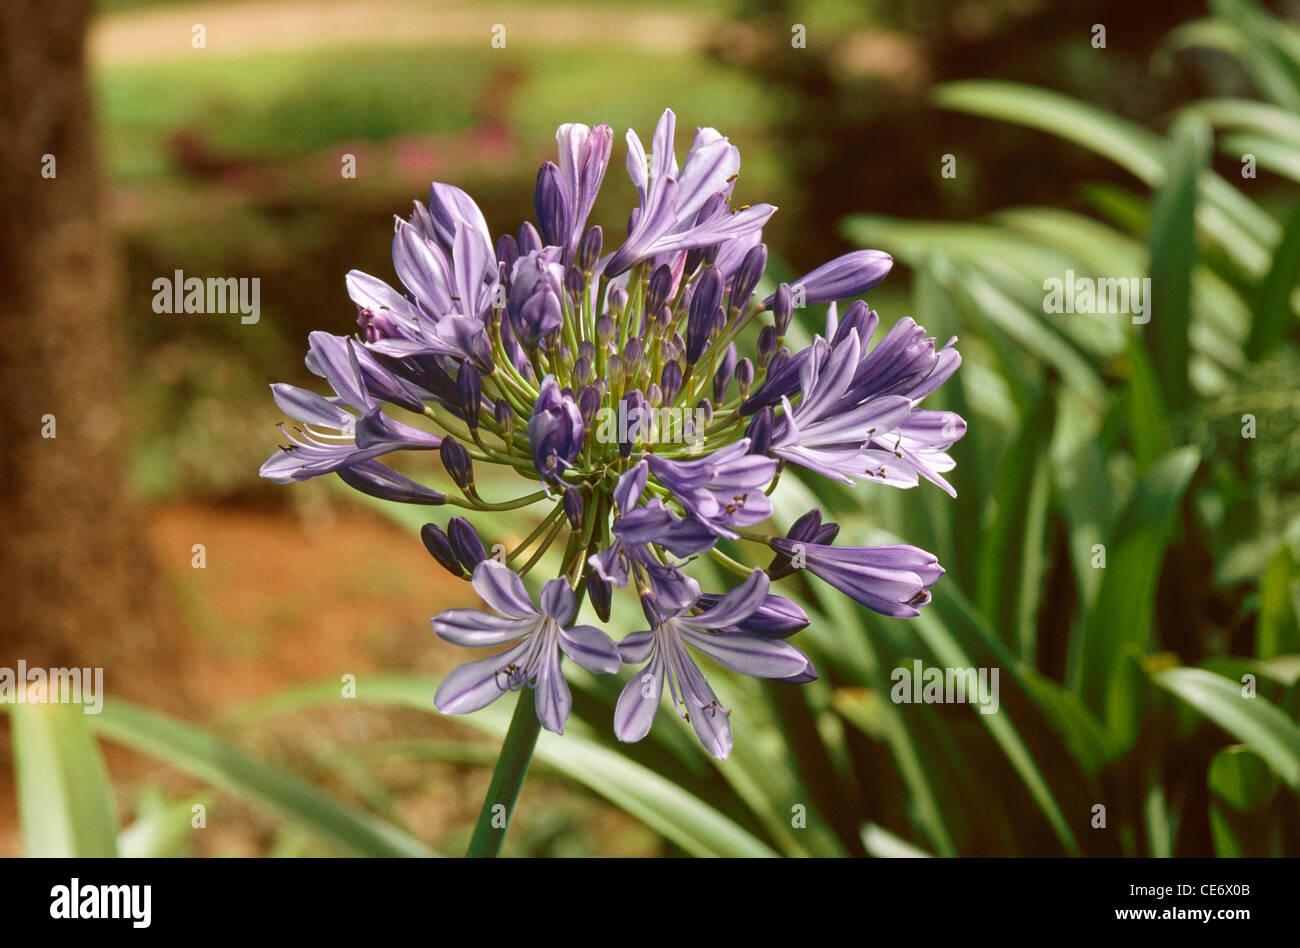 African lily ; Blue Lily ; Headbourne hybrid Agapanthus umbellatus ; violet purple flowers Stock Photo